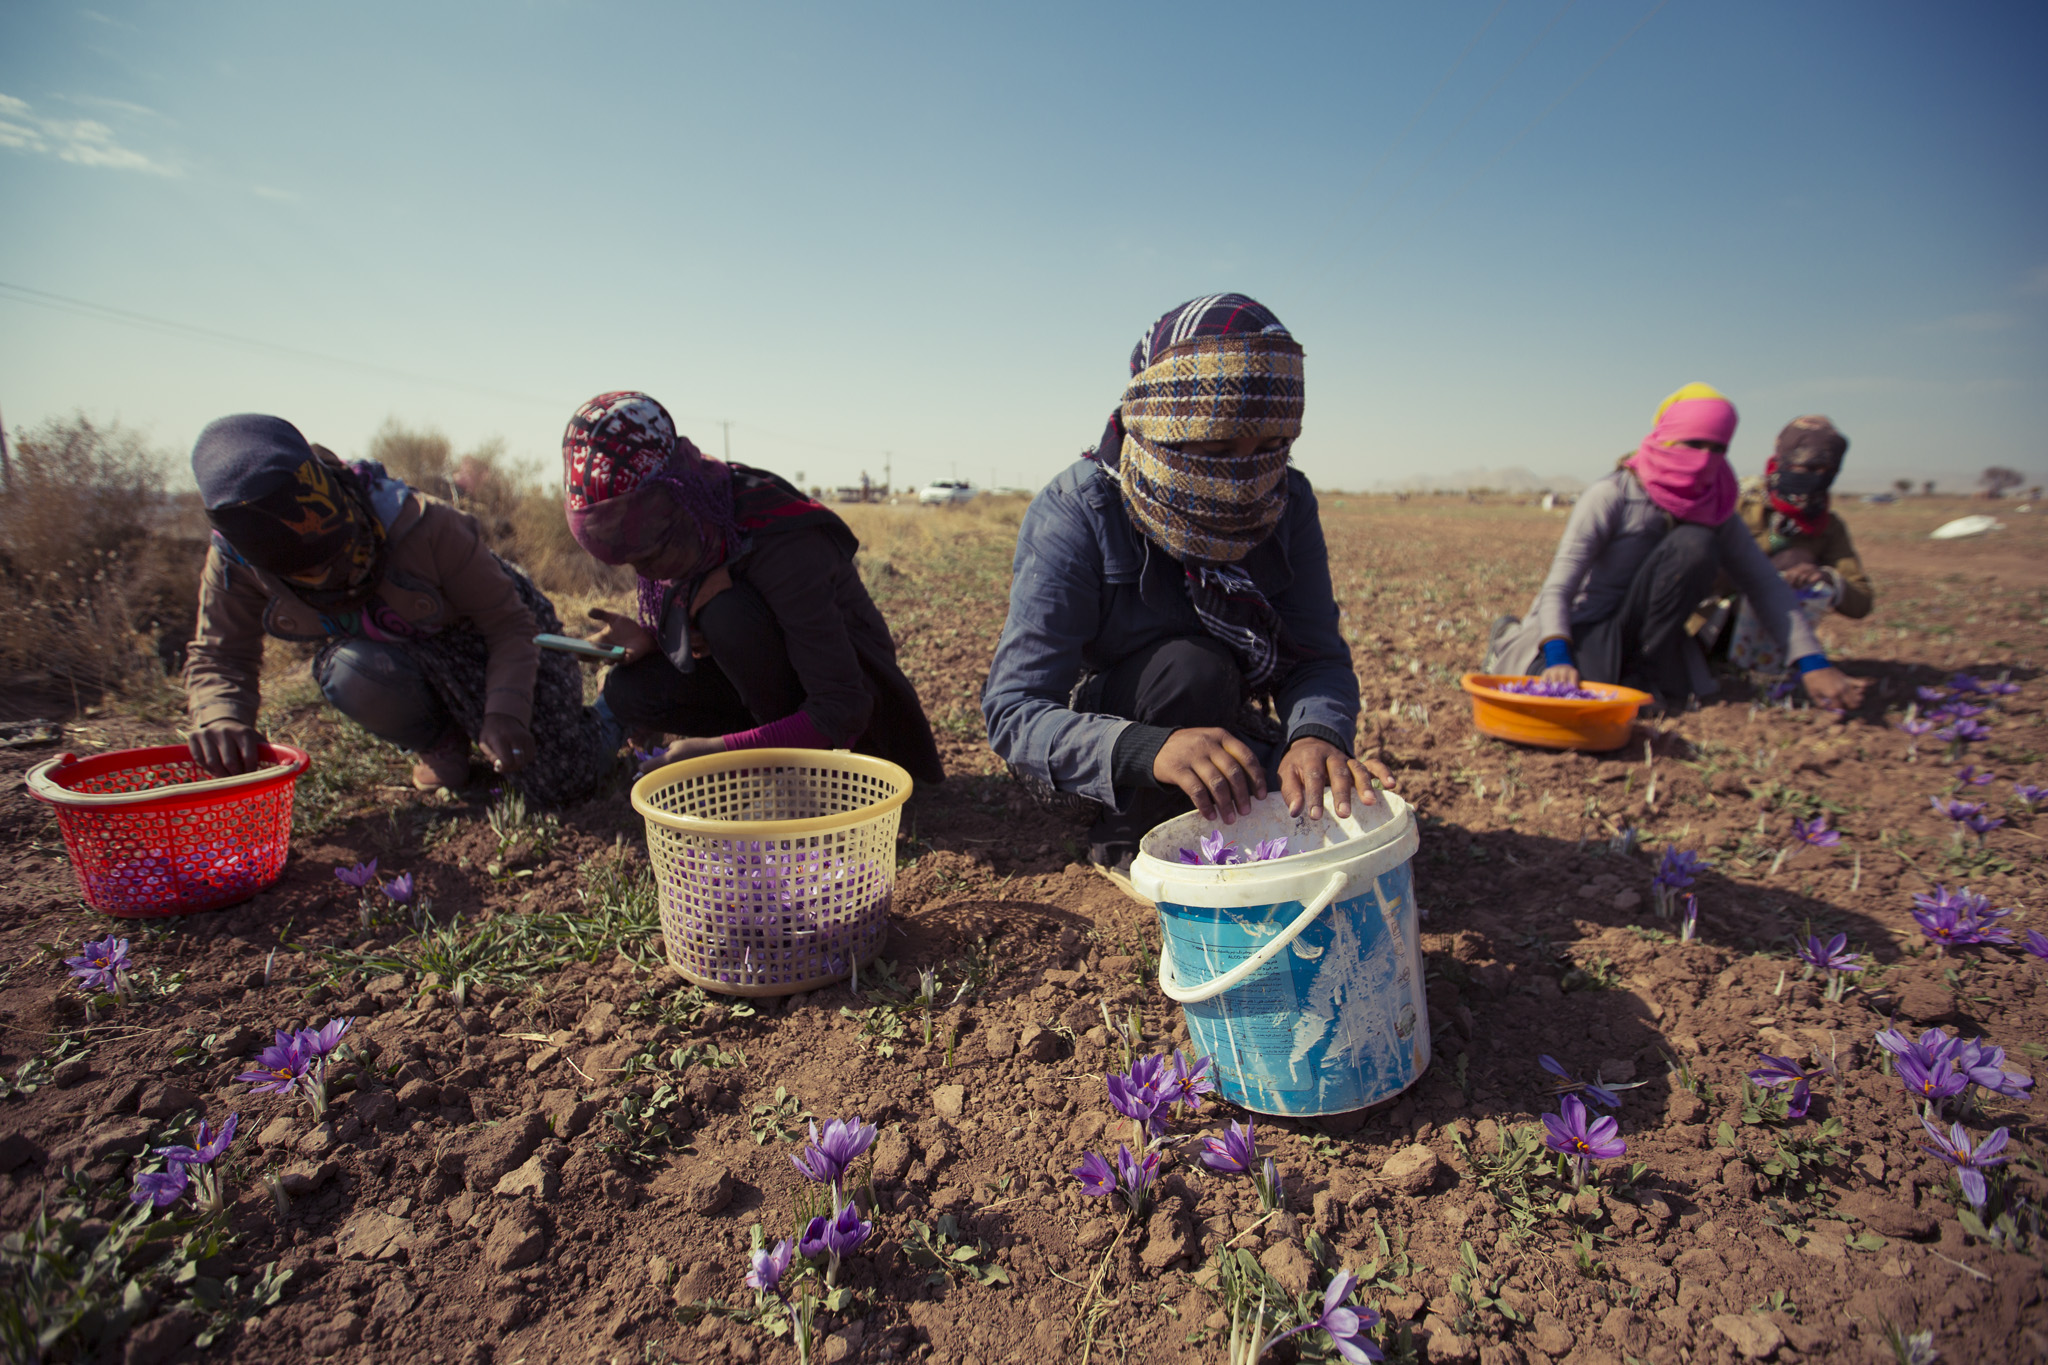 Saffron Photography Festival Khorasan, Iran.